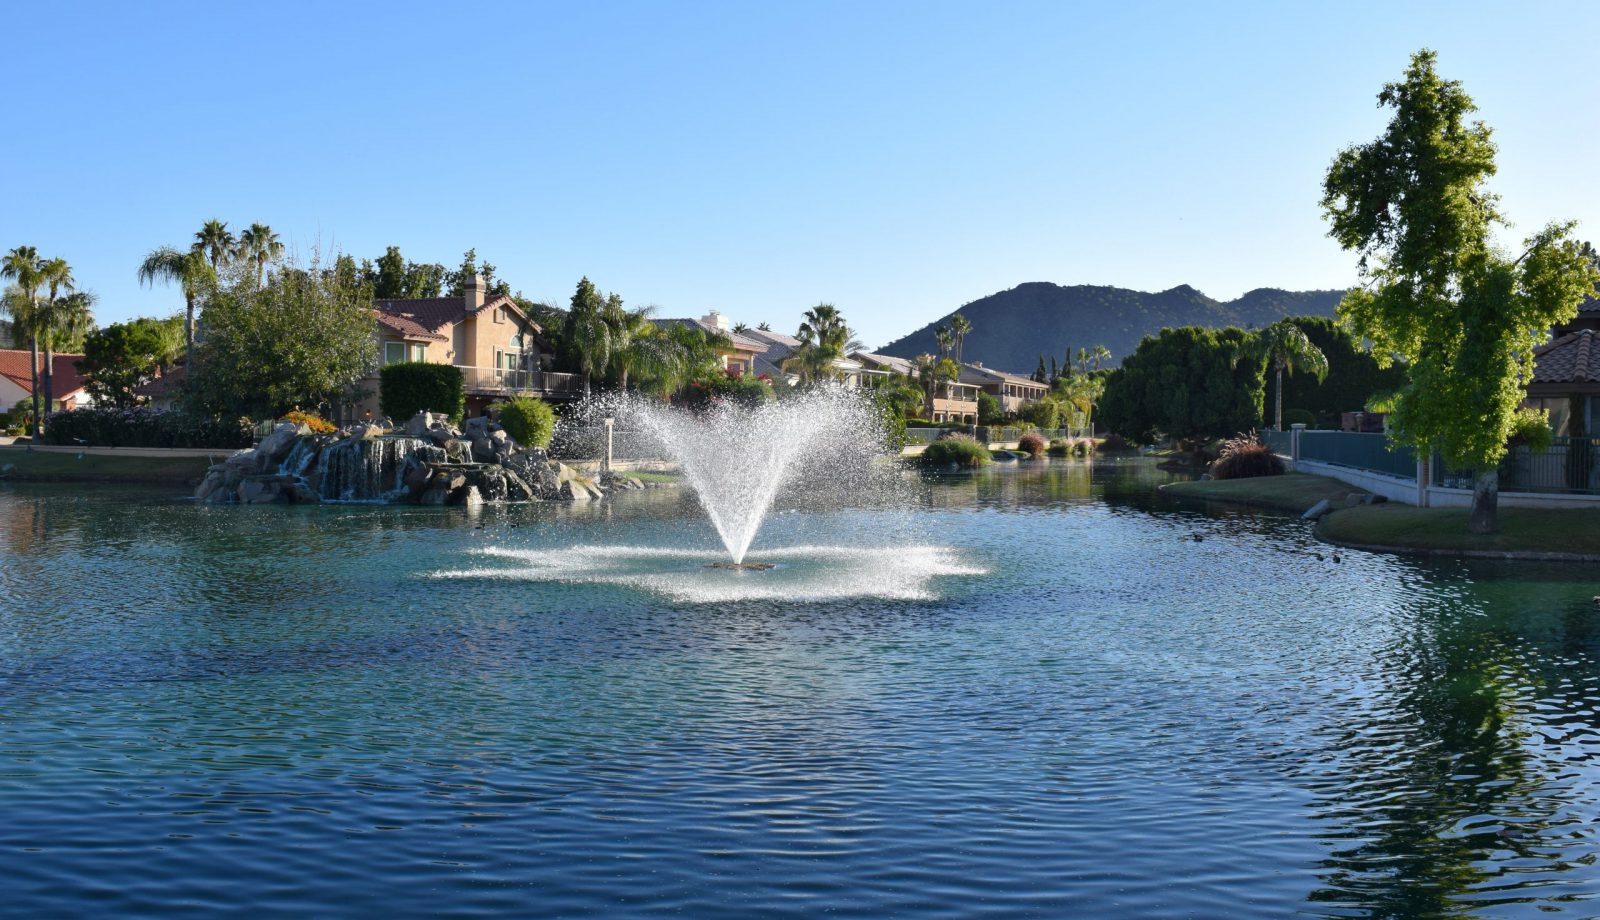 Lakewood_2HP_Phoenix,AZ_MattSerino solitude lake managaement fountains and aeration systems vendor partners aquamaster